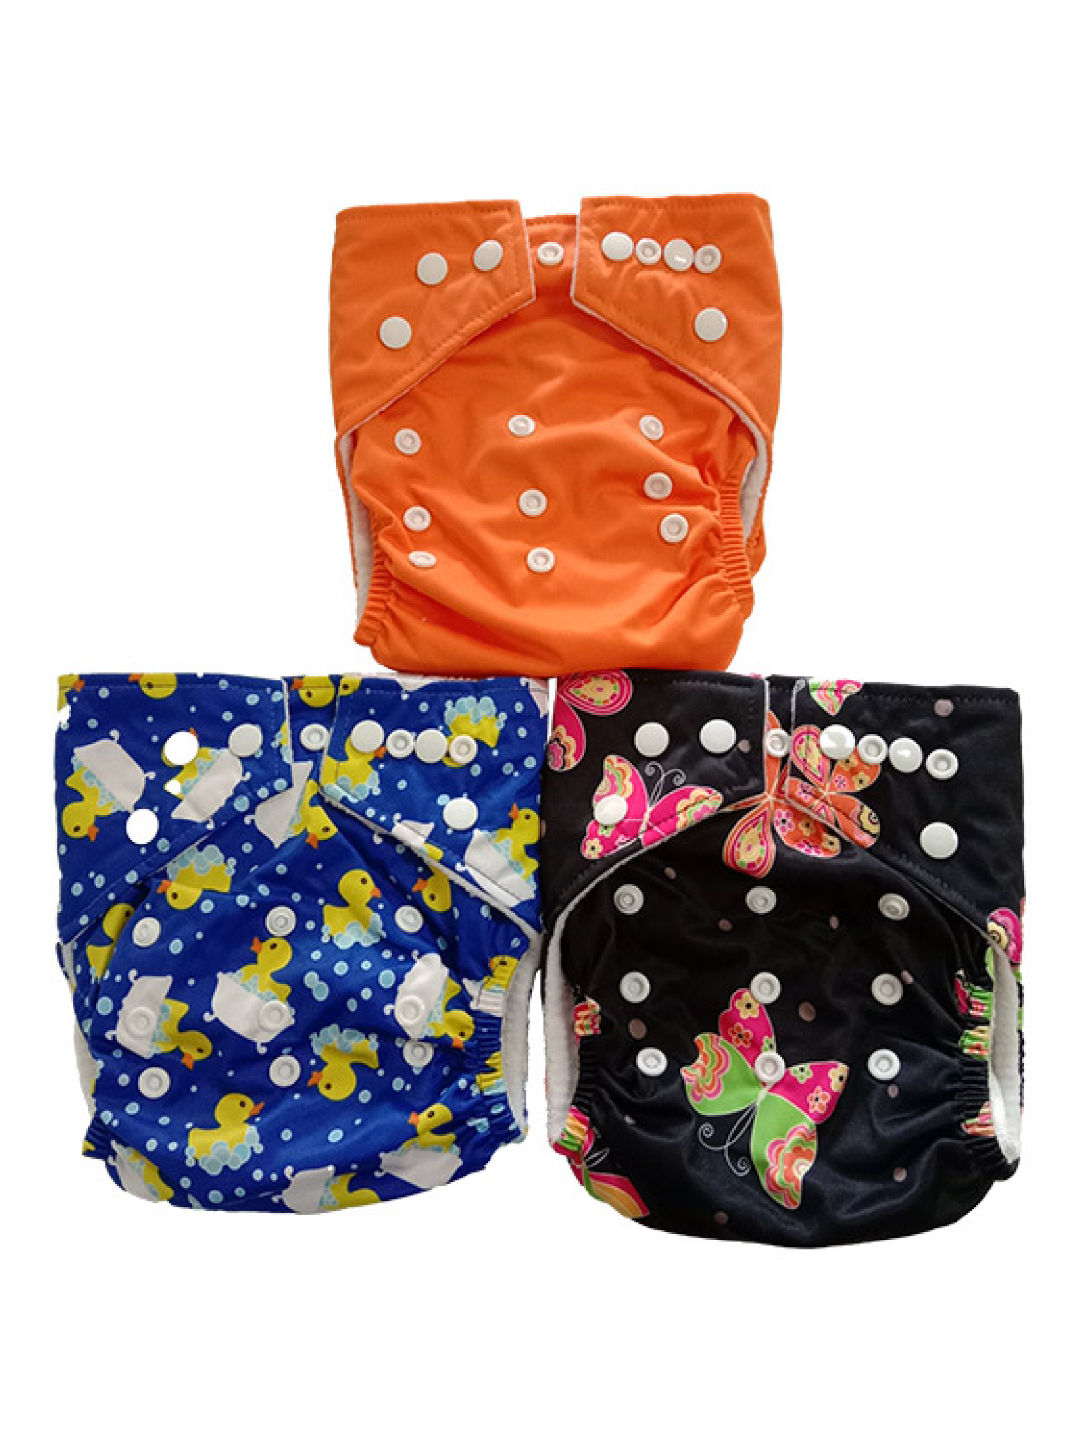 Next9 Girls Design Cloth Diapers (Set of 3) (Alexandra- Image 1)